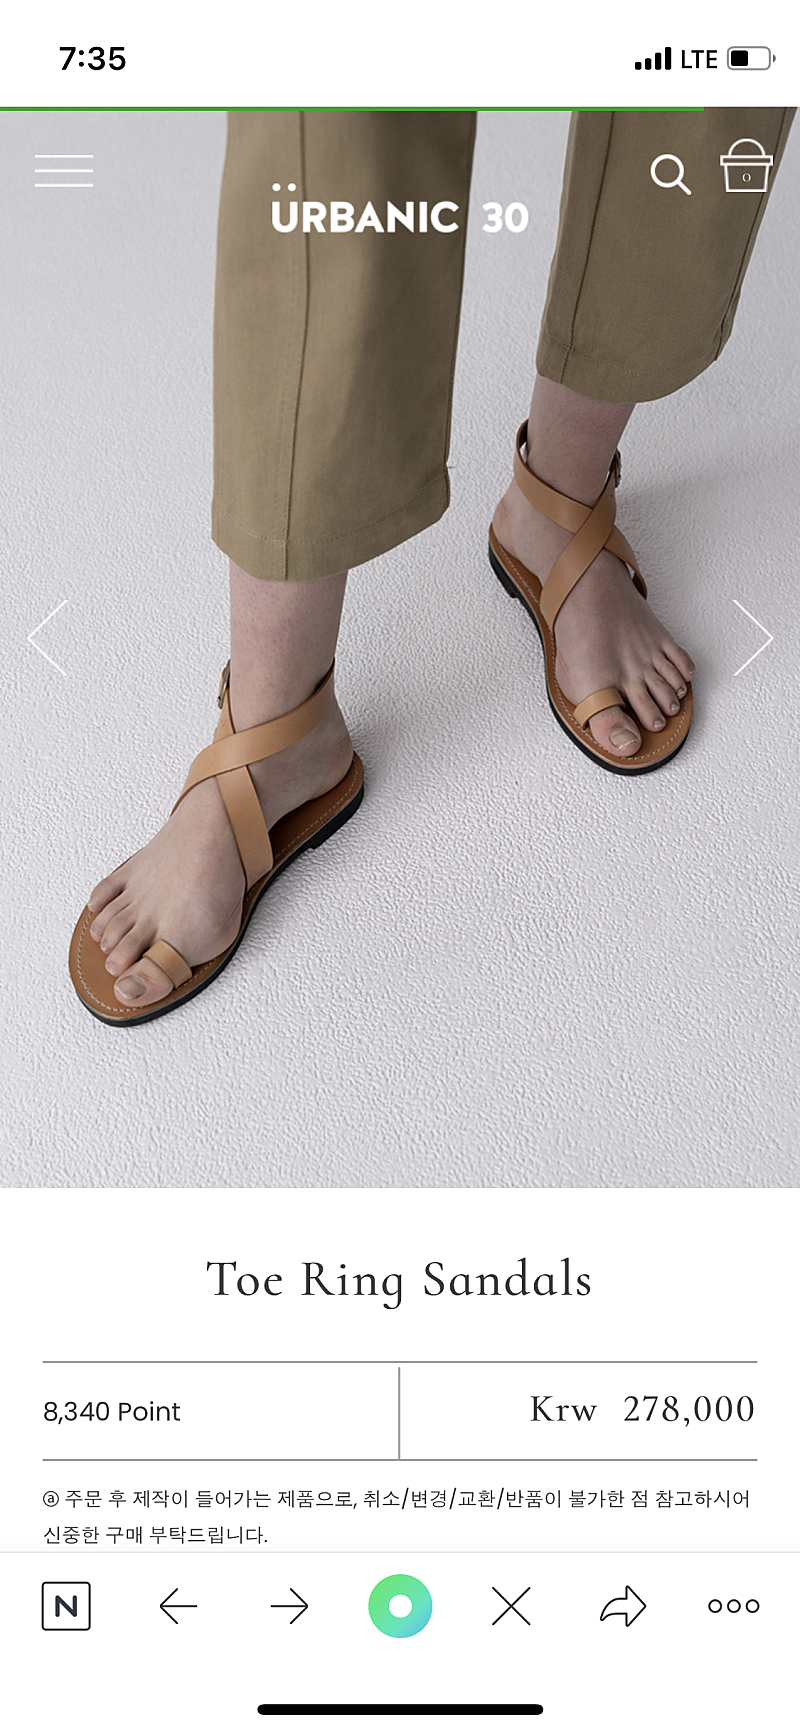 urbanic30 얼바닉30 toe ring sandals 팝니다.